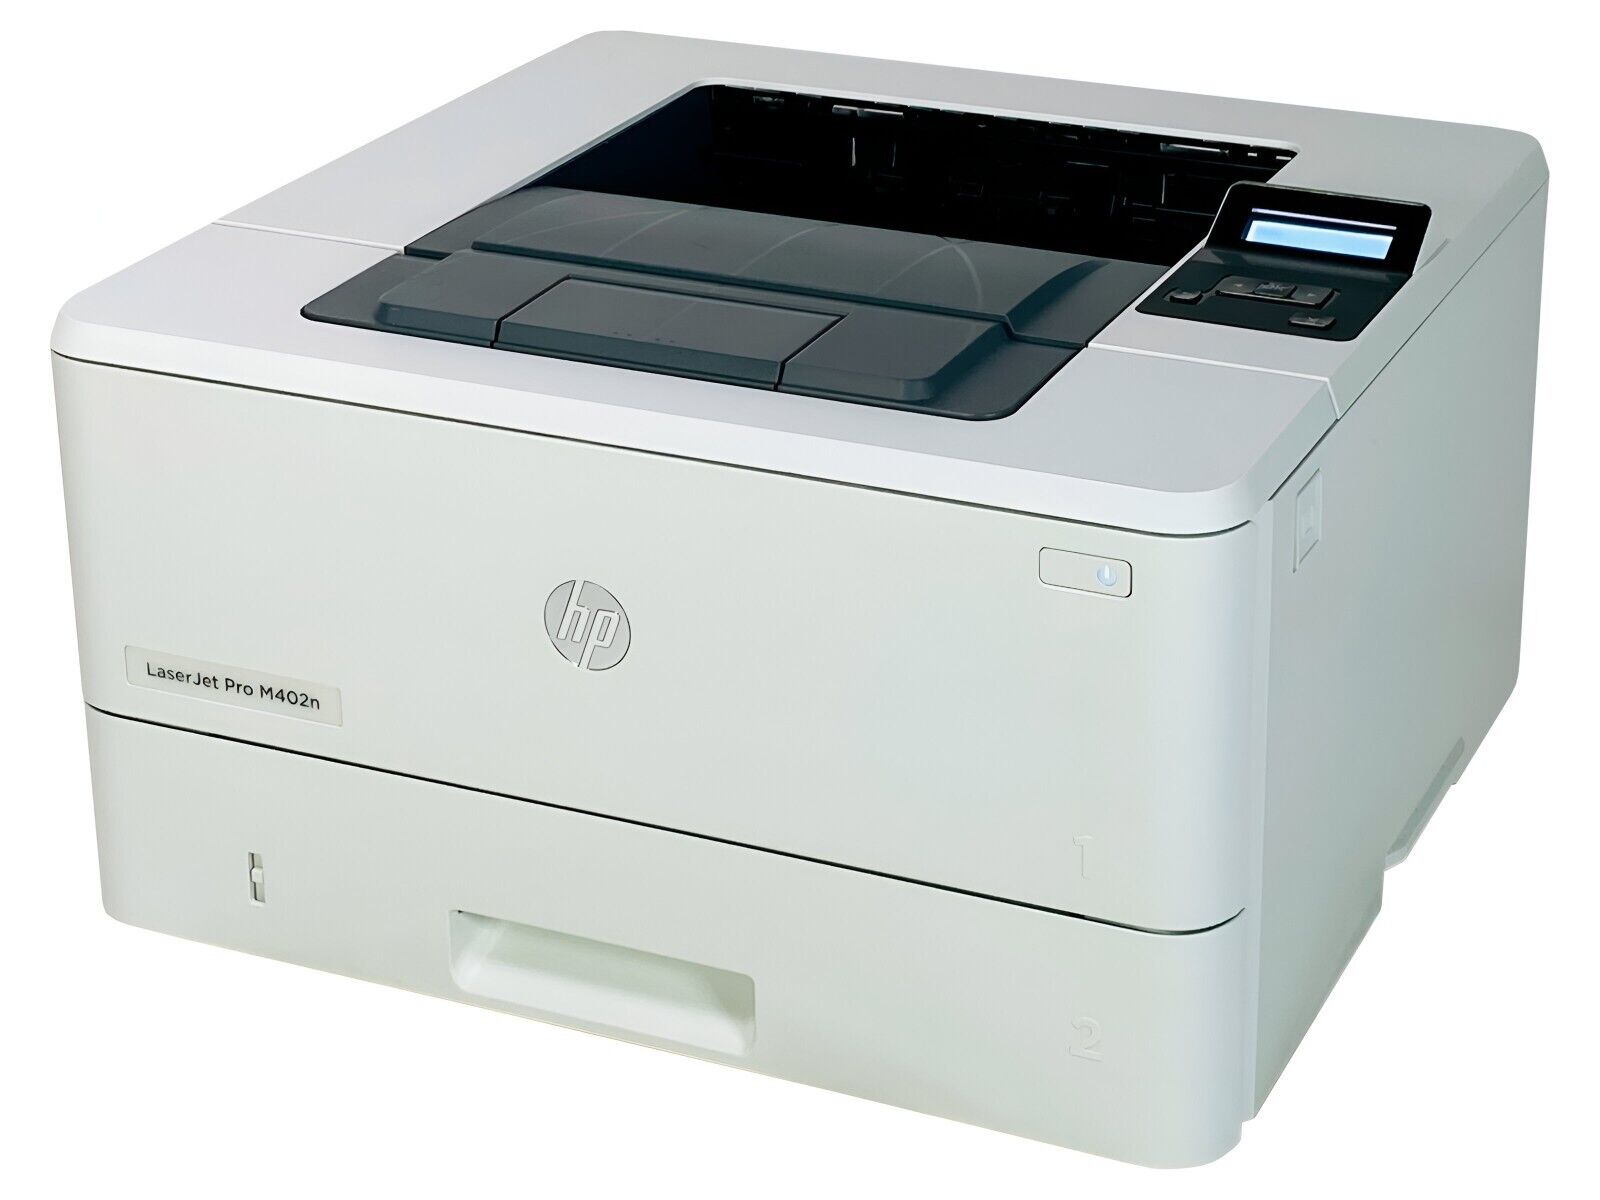 FULLY TESTED HP LaserJet Pro M402n Network Monochrome Laser Printer with Toner